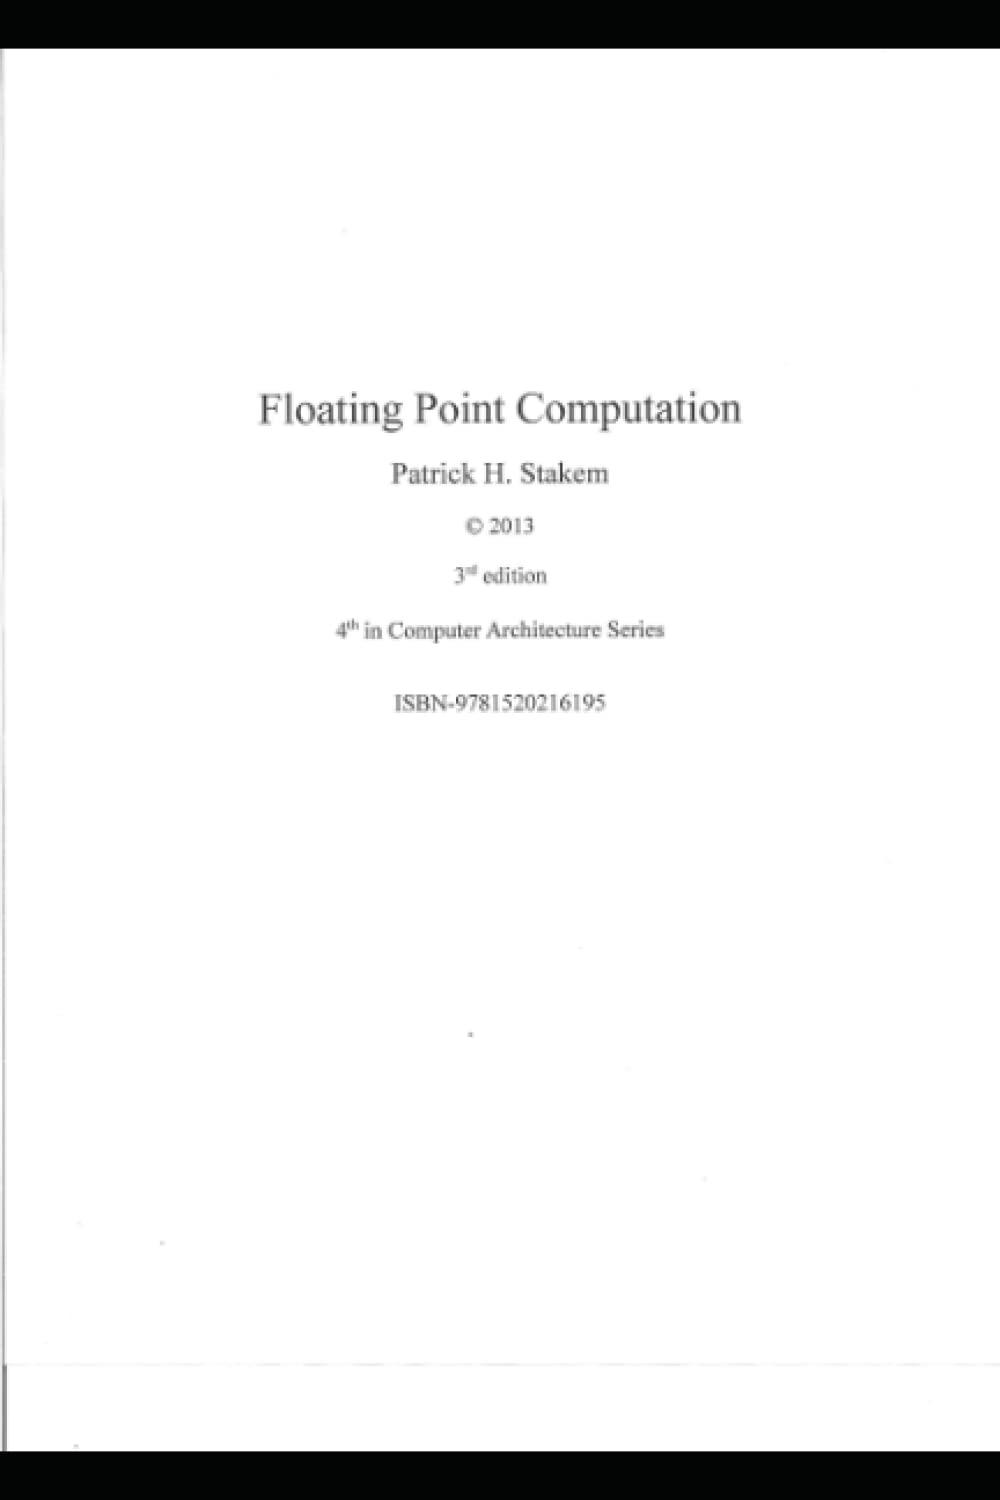 floating point computation 1st edition patrick stakem 152021619x, 978-1520216195